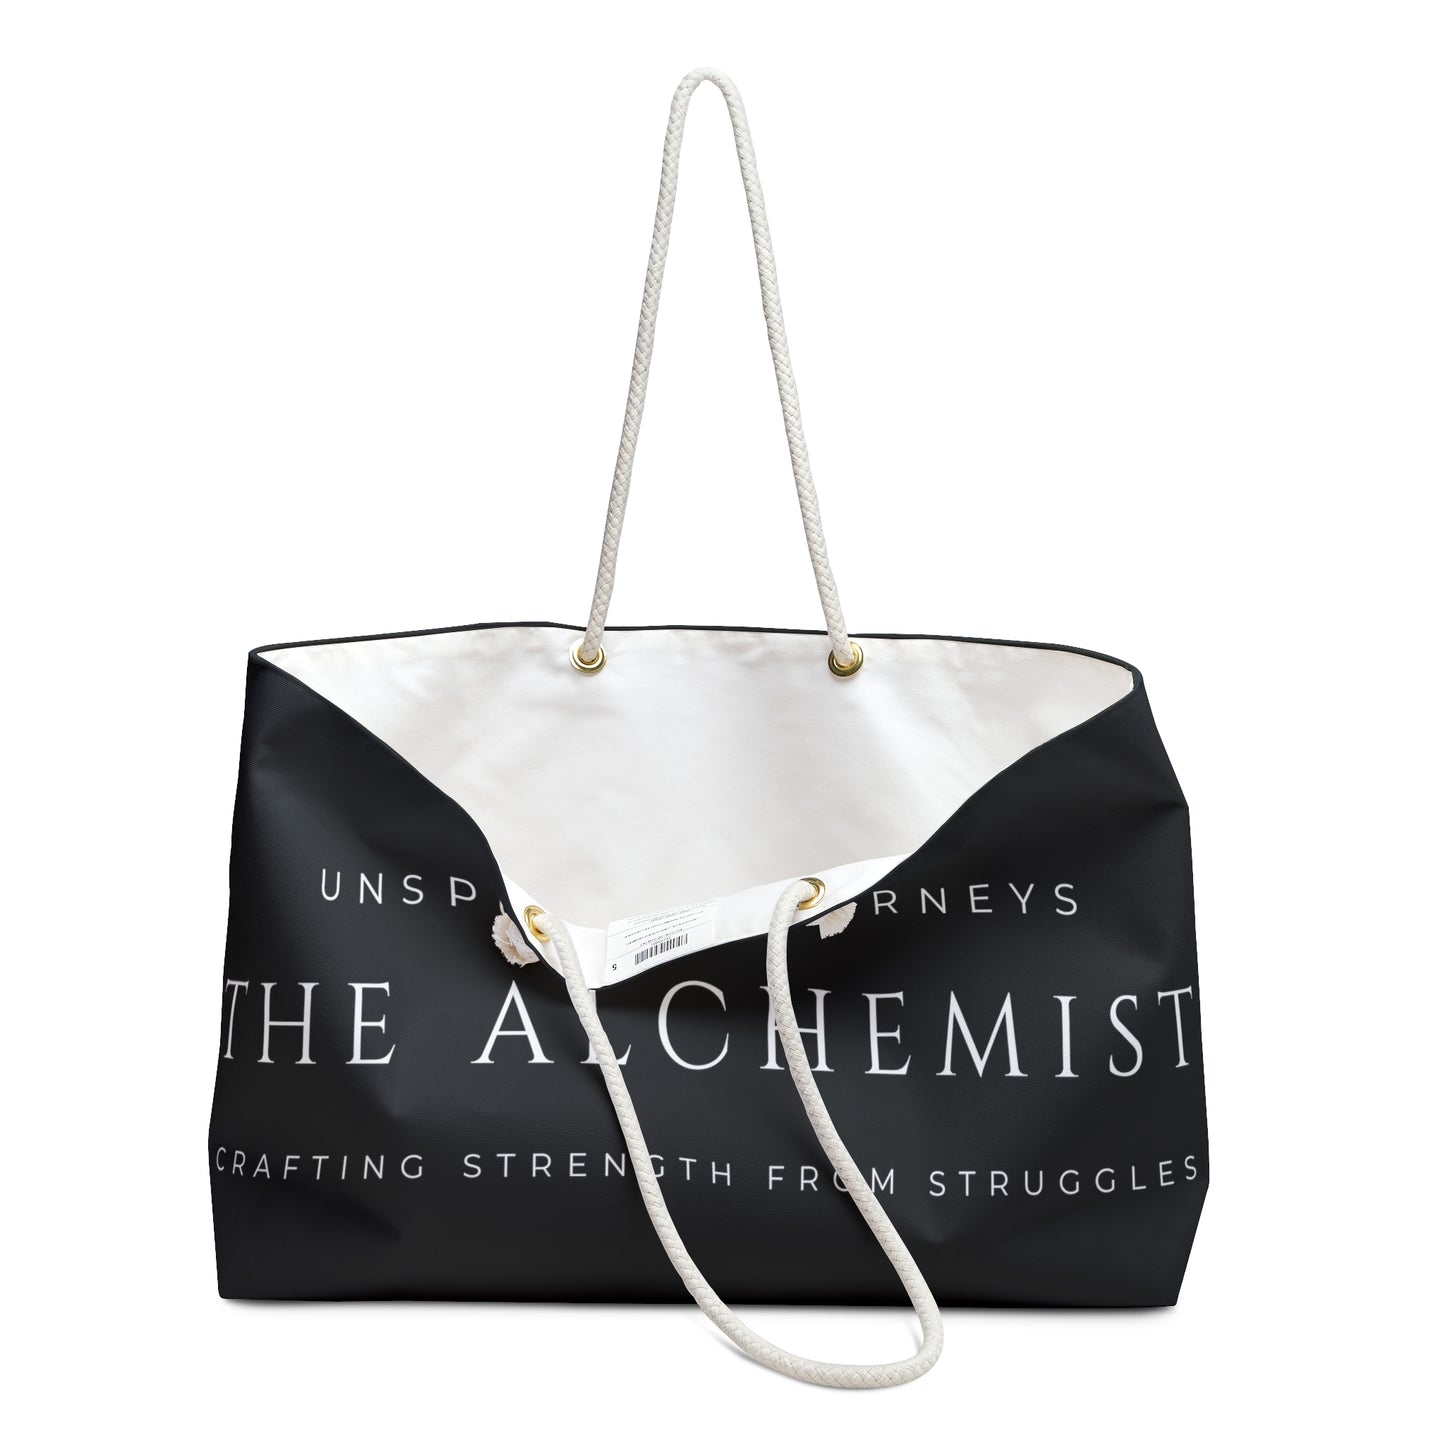 'The Alchemist' Weekender Bag